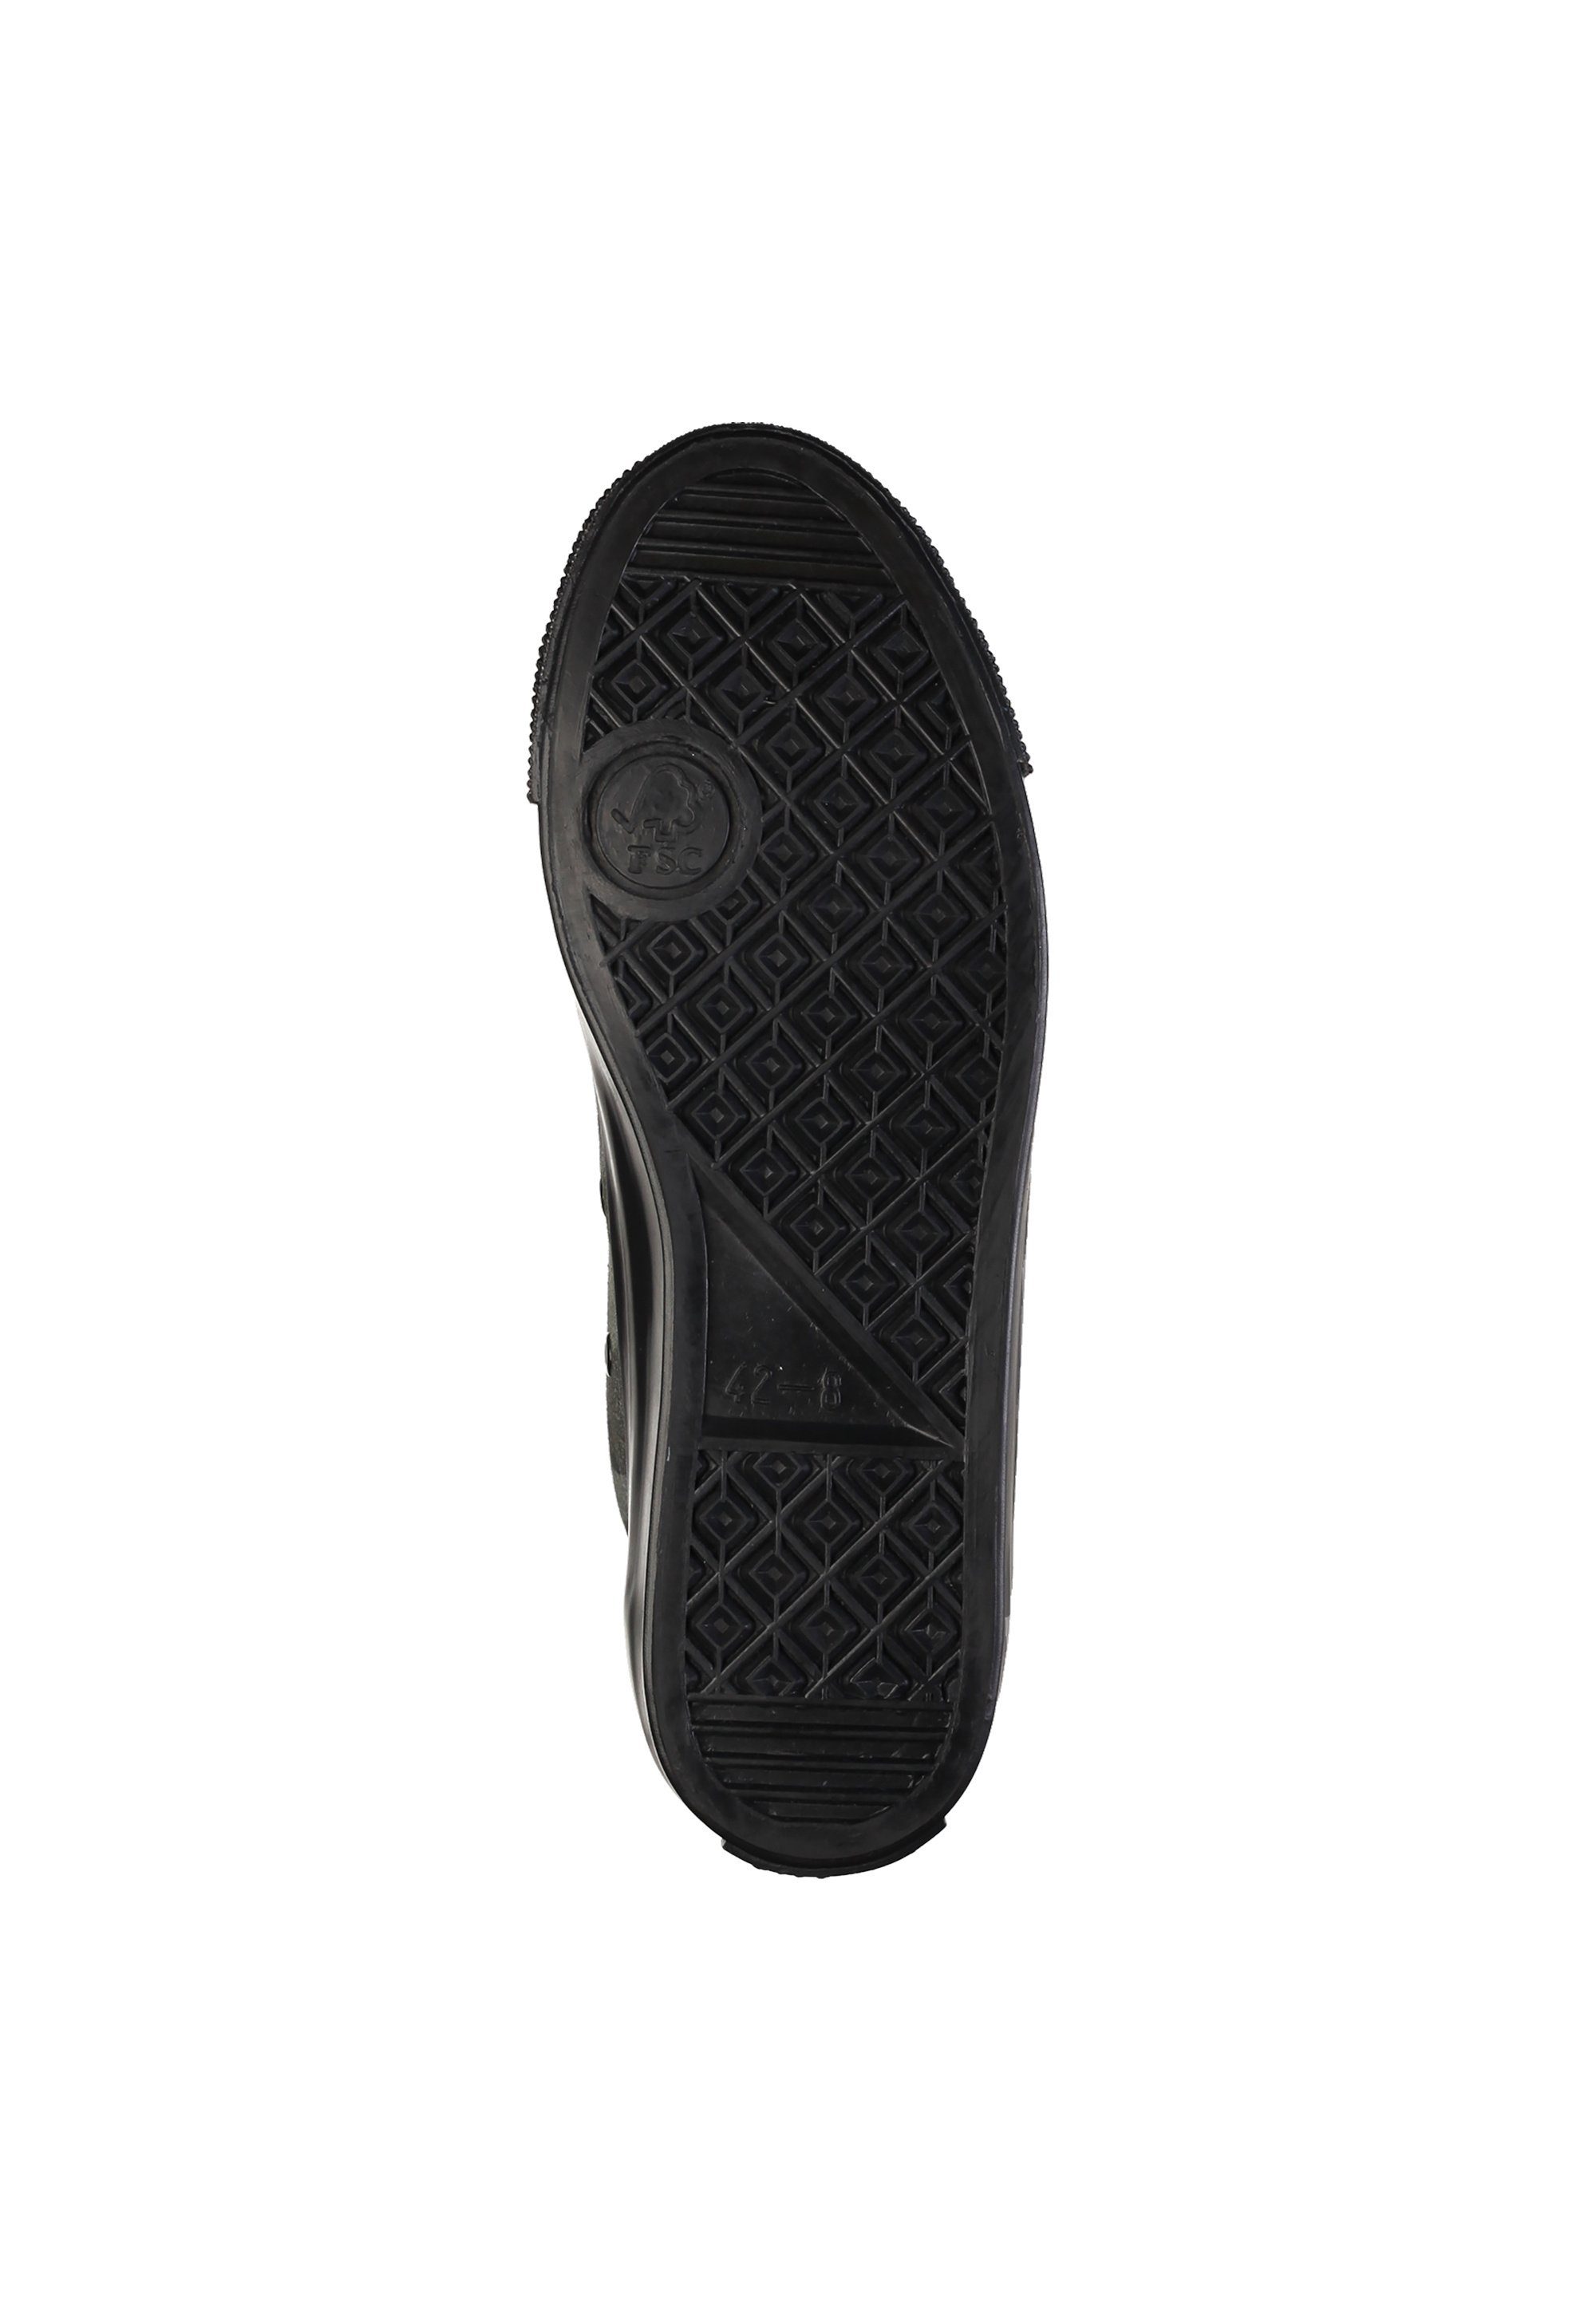 ETHLETIC Black Produkt olive Lo black Cap - jet Fairtrade rights human Cut Sneaker